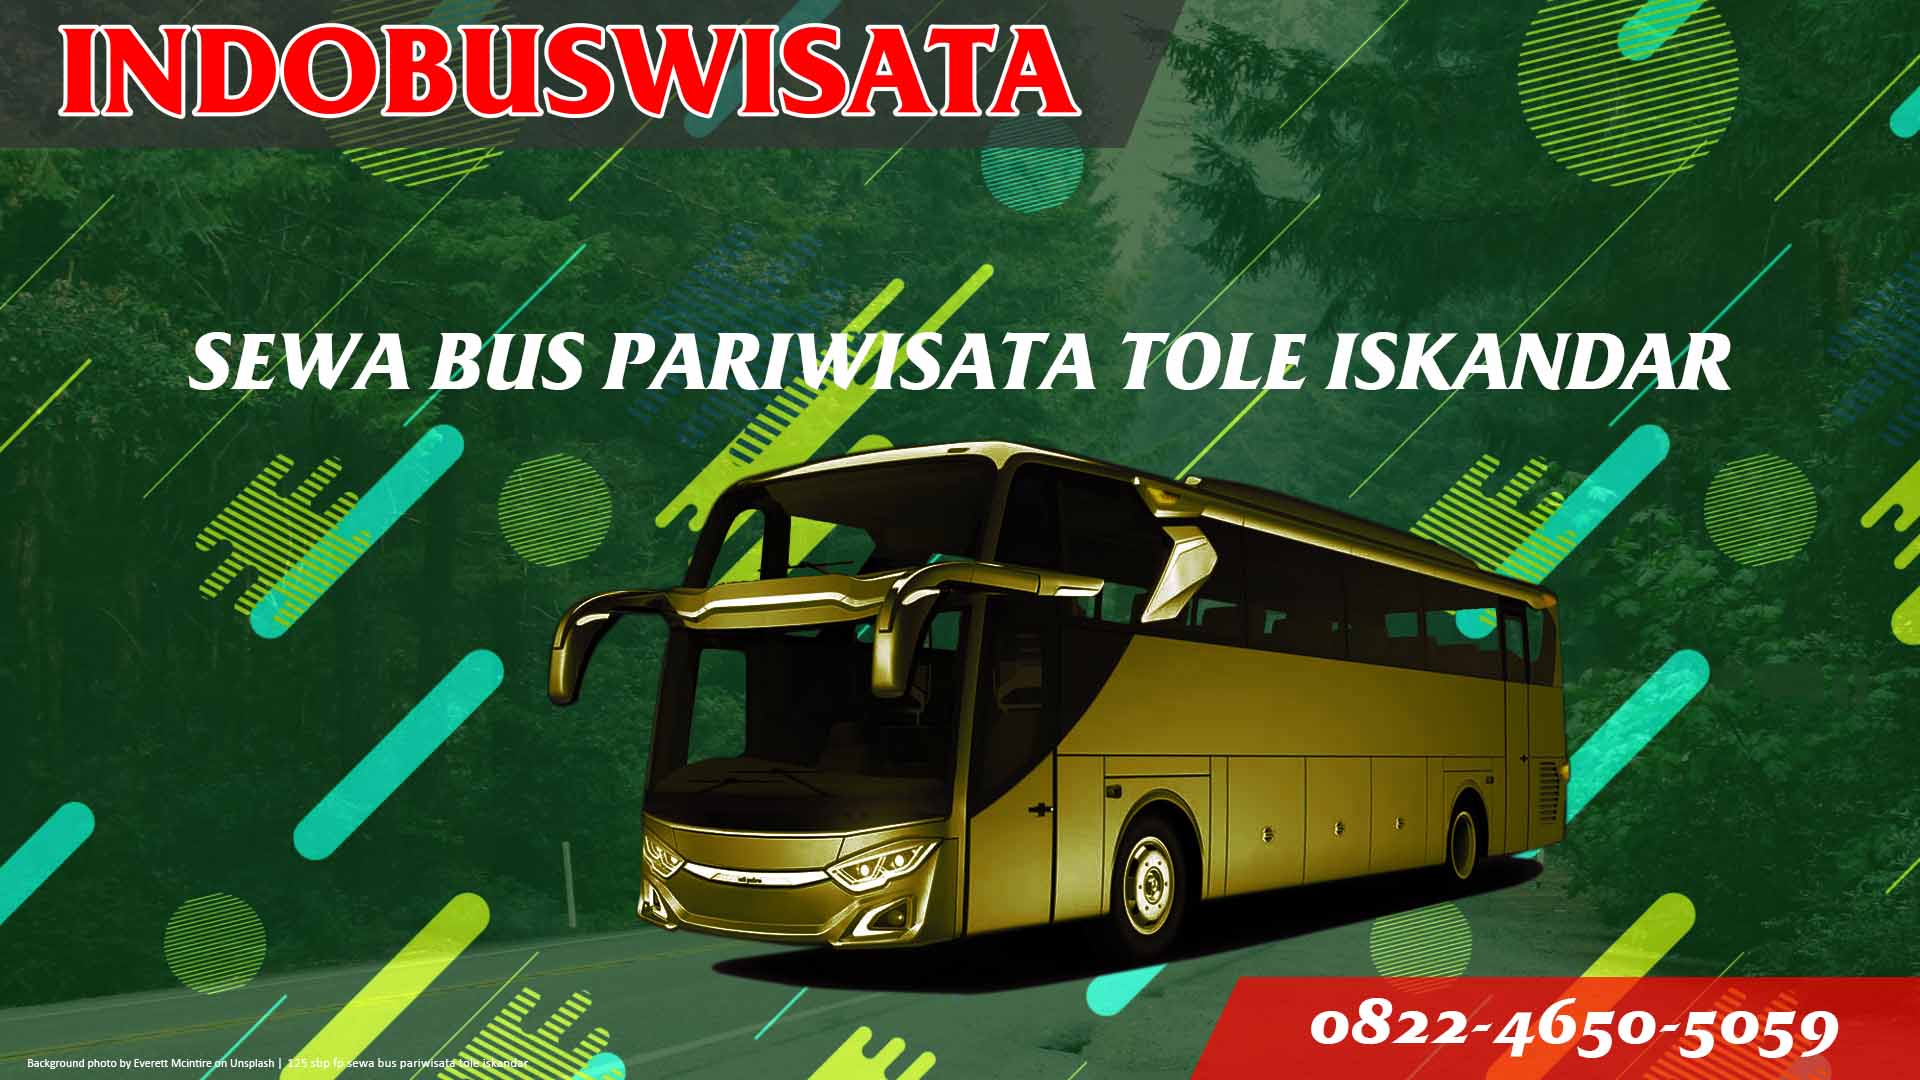 125 Sbp Fp Sewa Bus Pariwisata Tole Iskandar Indobuswisata